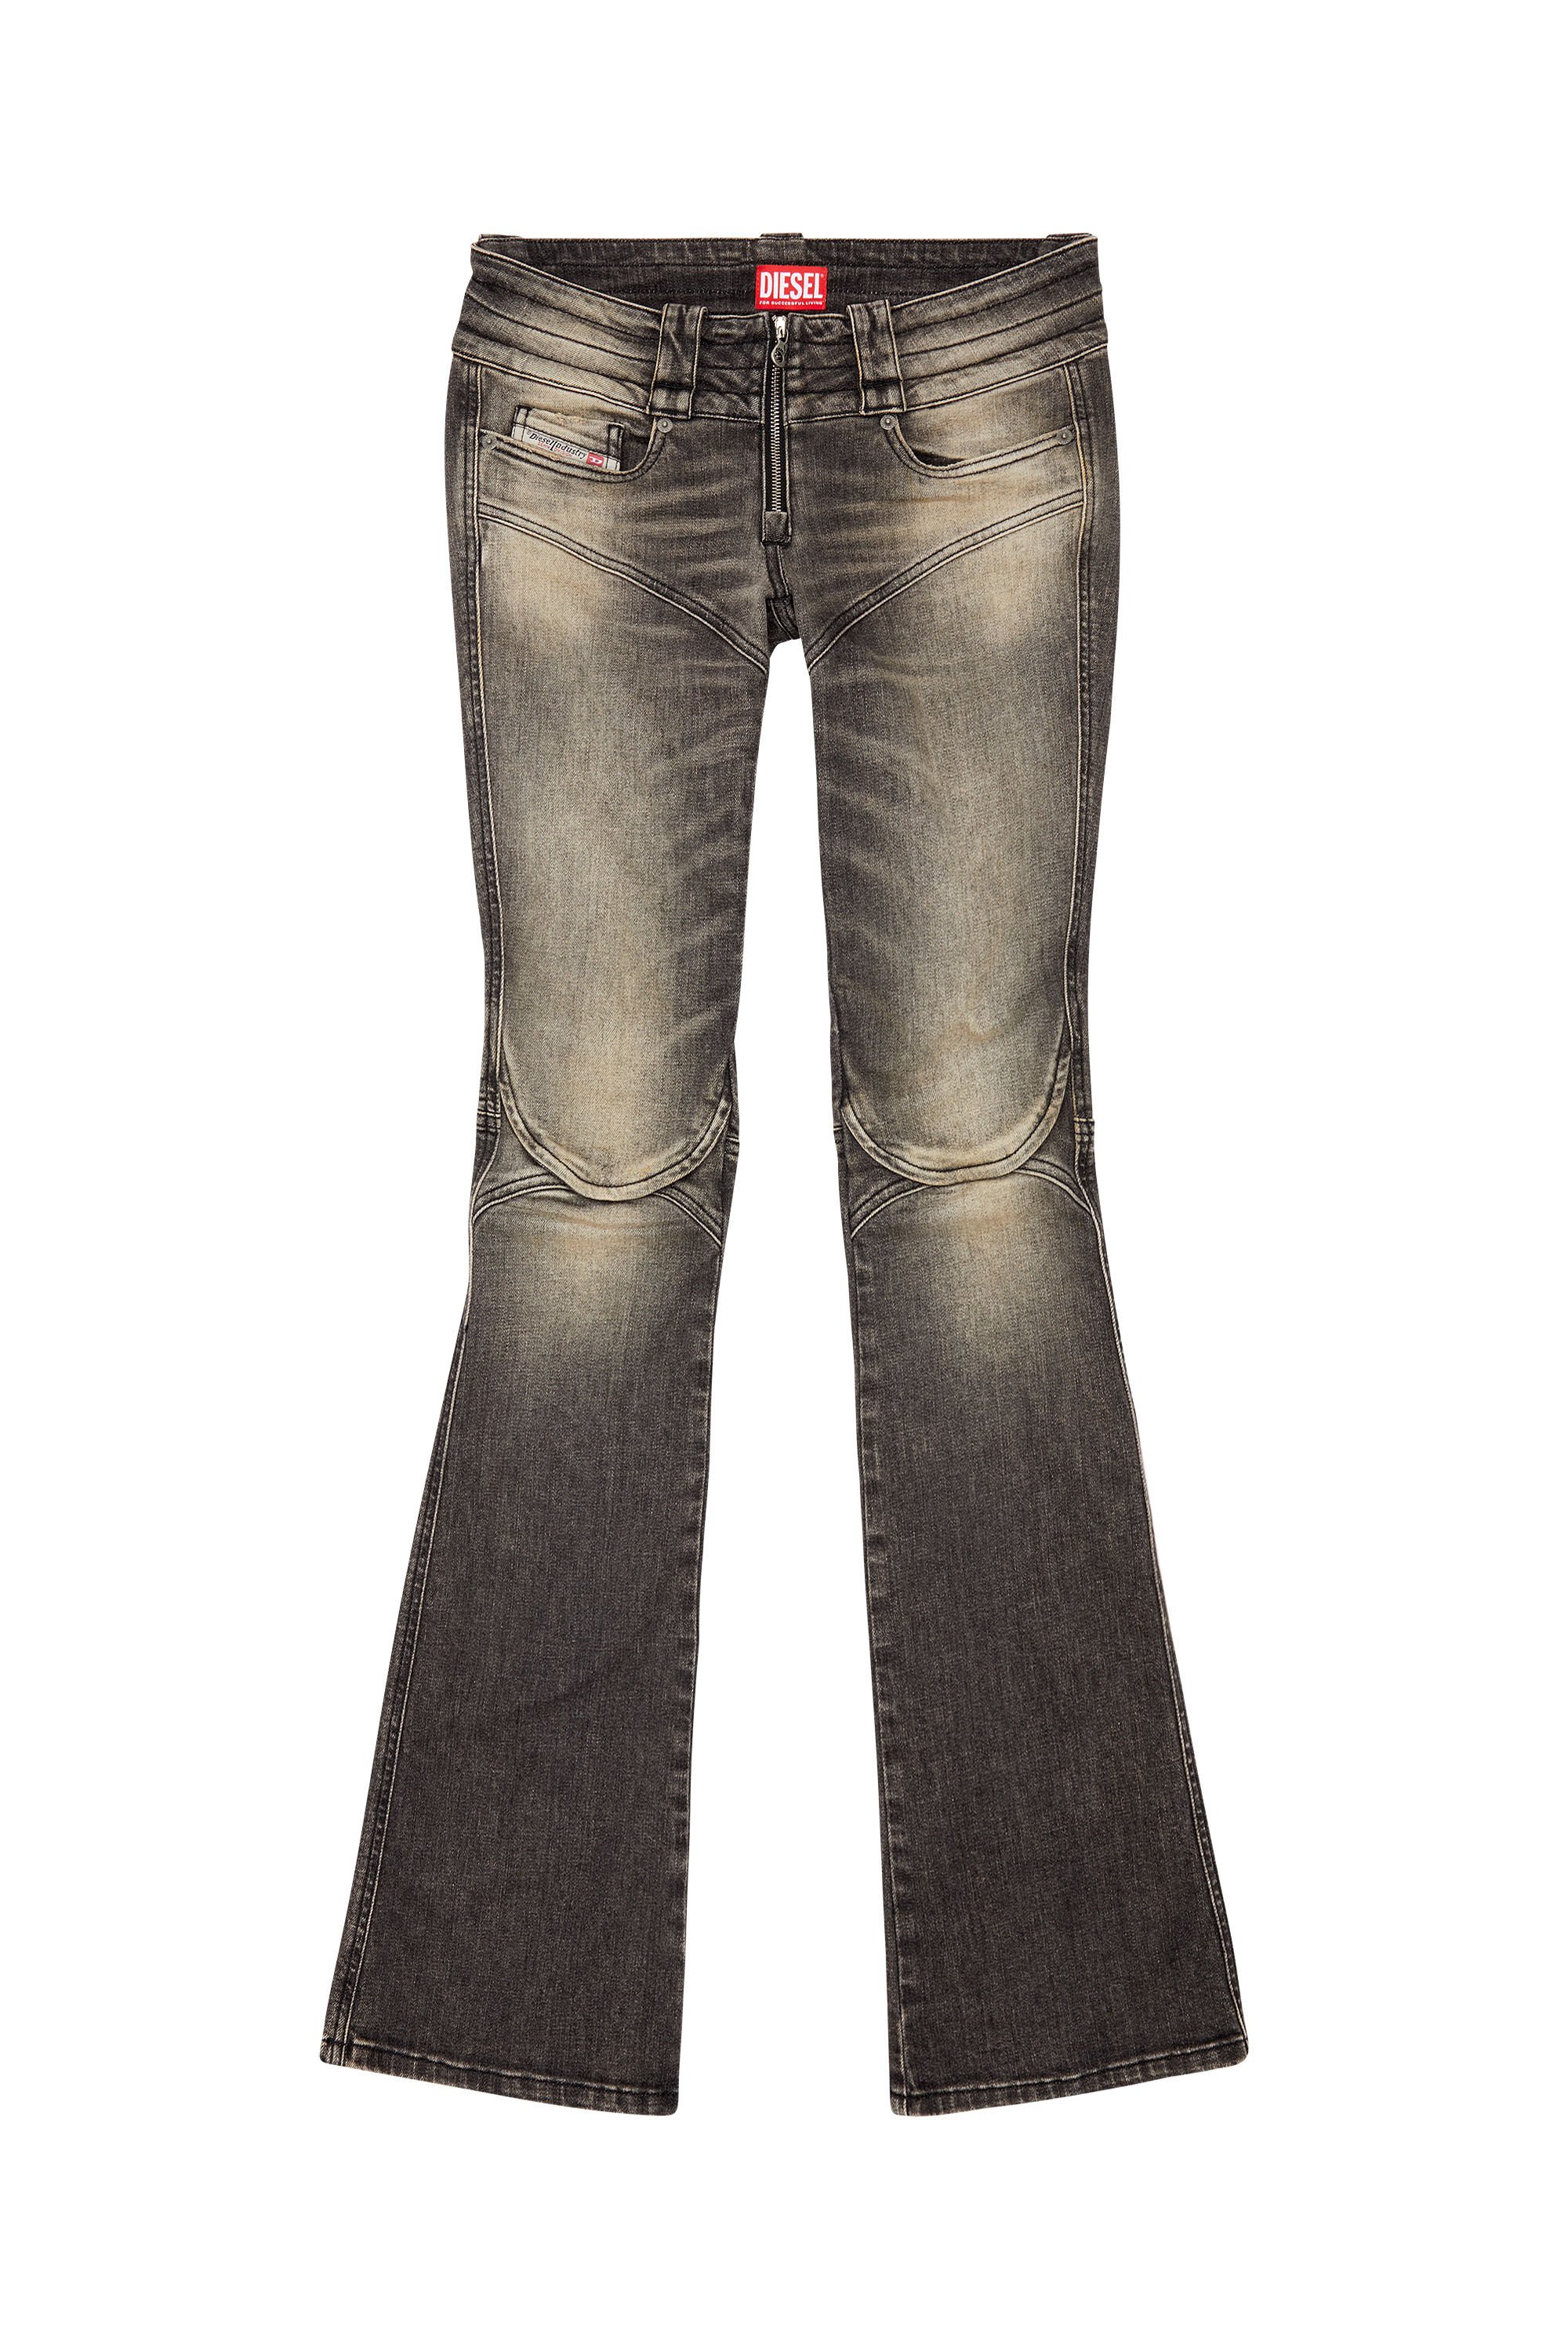 Women's Bootcut and Flare Jeans | Black/Dark grey | Diesel Belthy